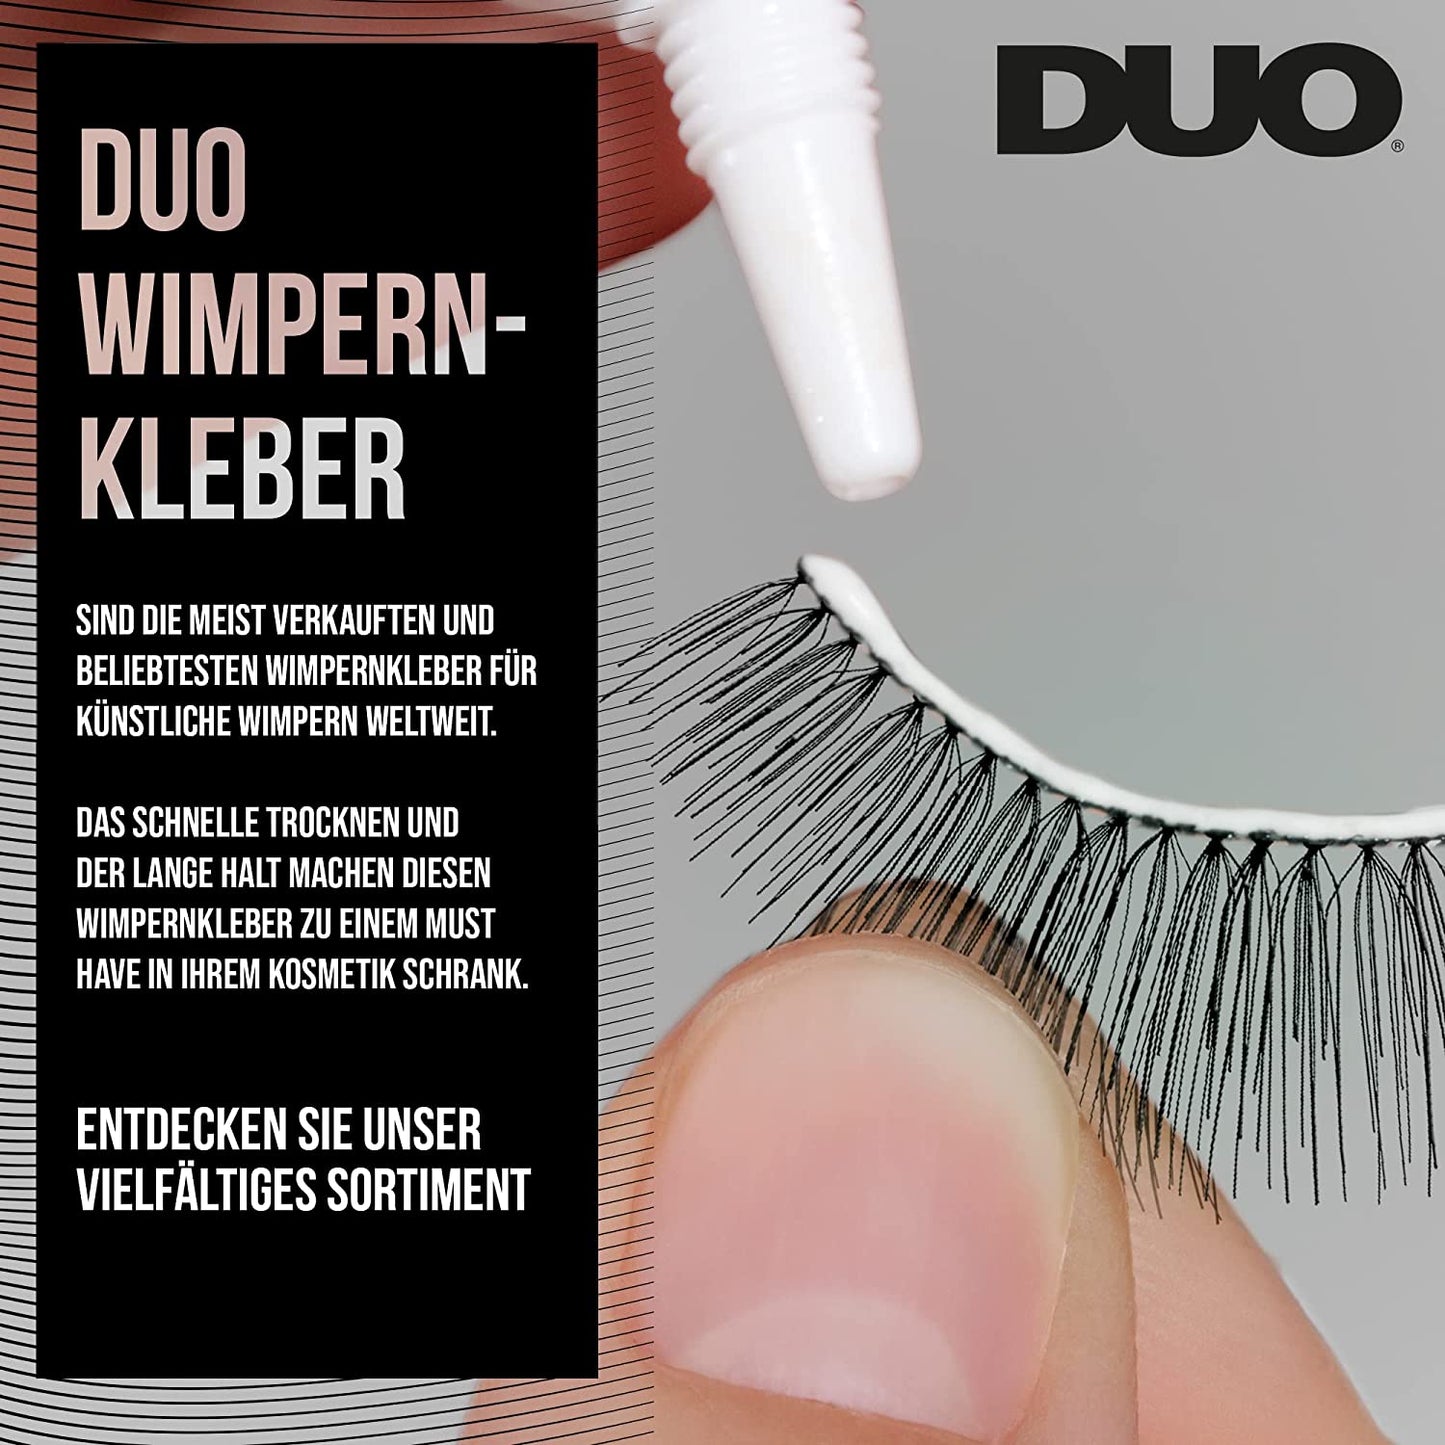 DUO - Quick-Set Striplash Artificial Eyelash Adhesive - White/Clear 7g